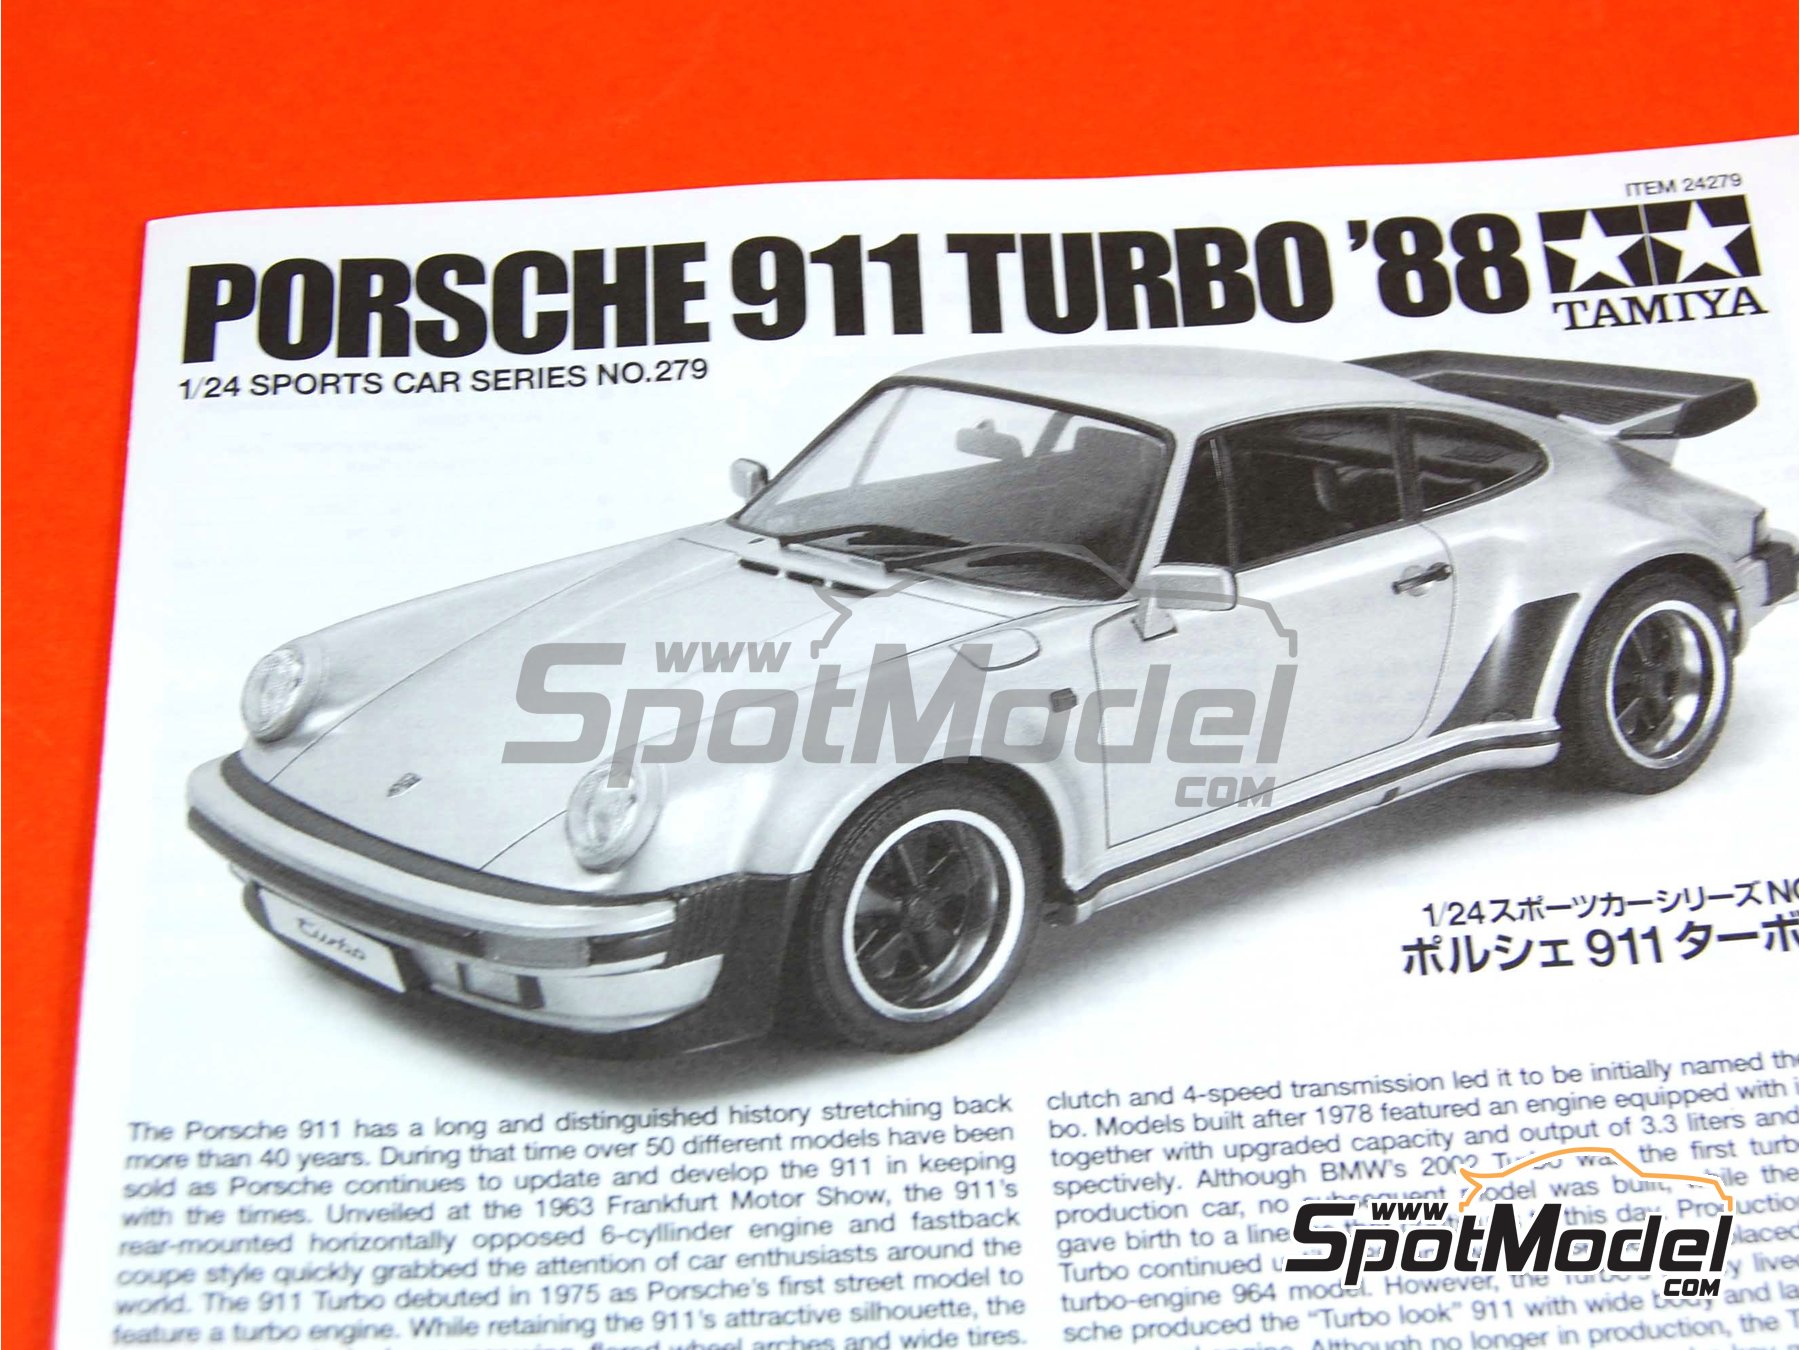 Tamiya 24279 Porsche 911 Turbo 1988 1/24 Scale Kit for sale online 